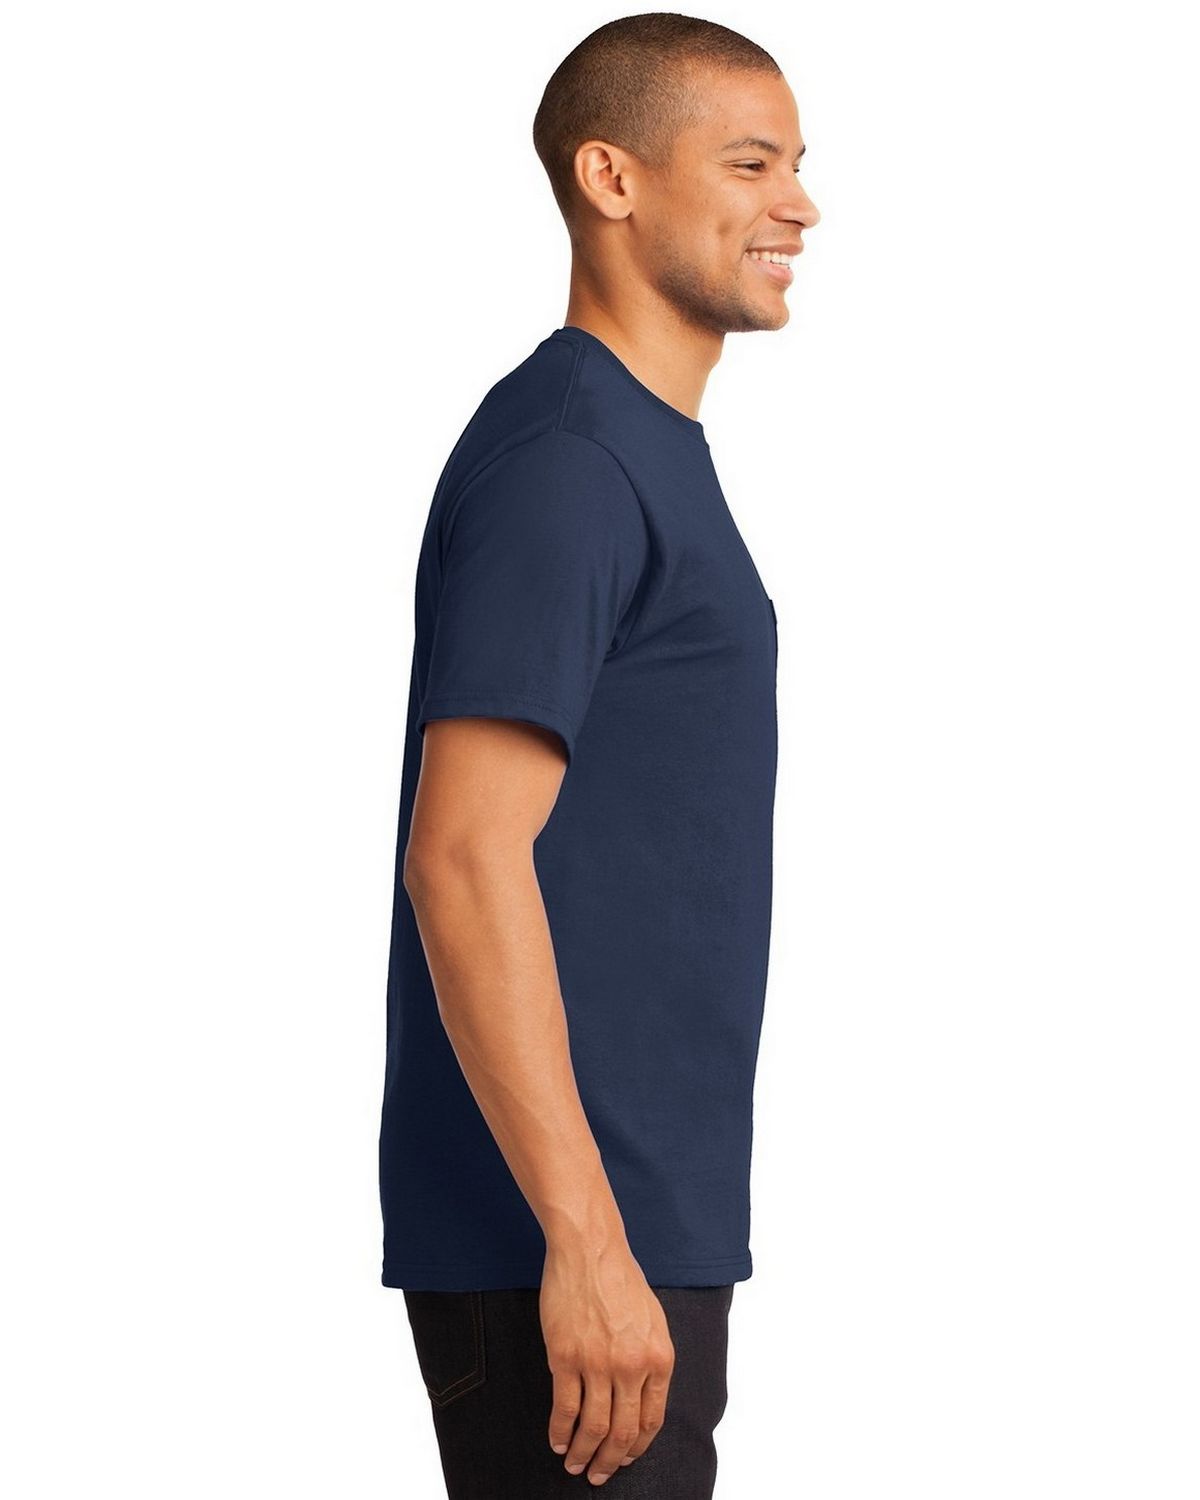 Port & Company Essential T Shirt with Pocket Apparel Black PC61P 